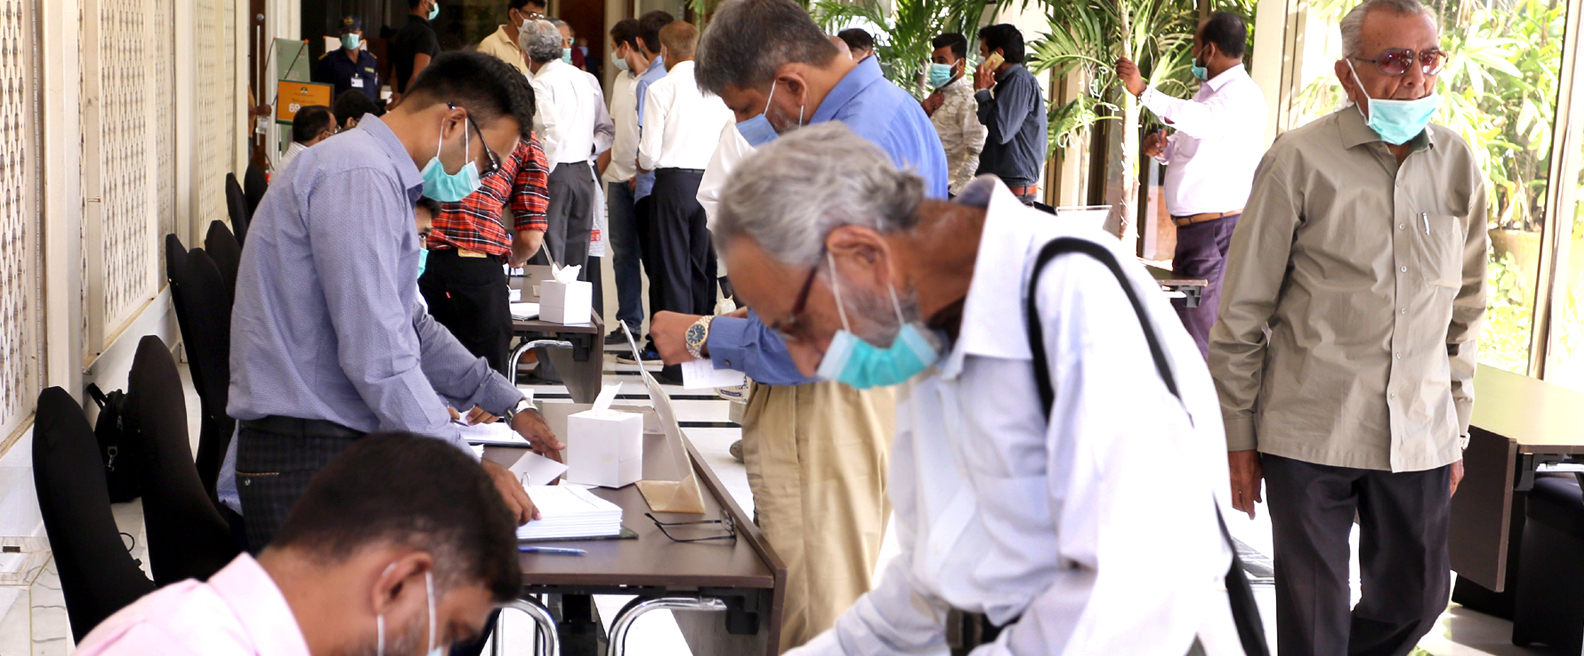 Shareholders’ register at Annual General Meeting 2020 in Karachi 